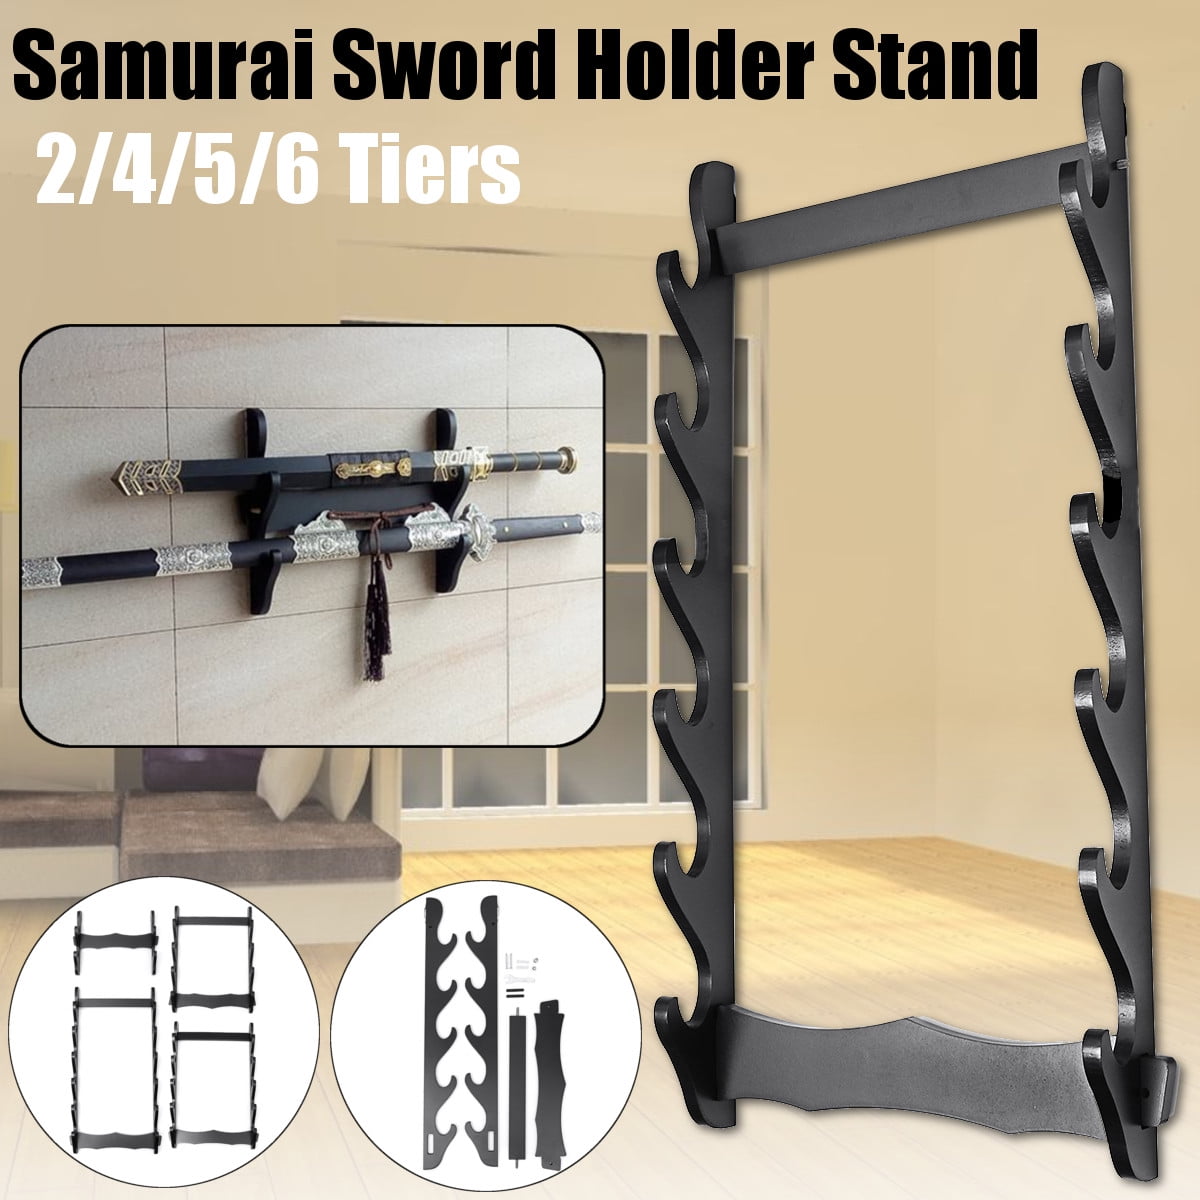 Deluxe 8 Tiers Wall Mounted Samurai Katana Sword Display Stand 